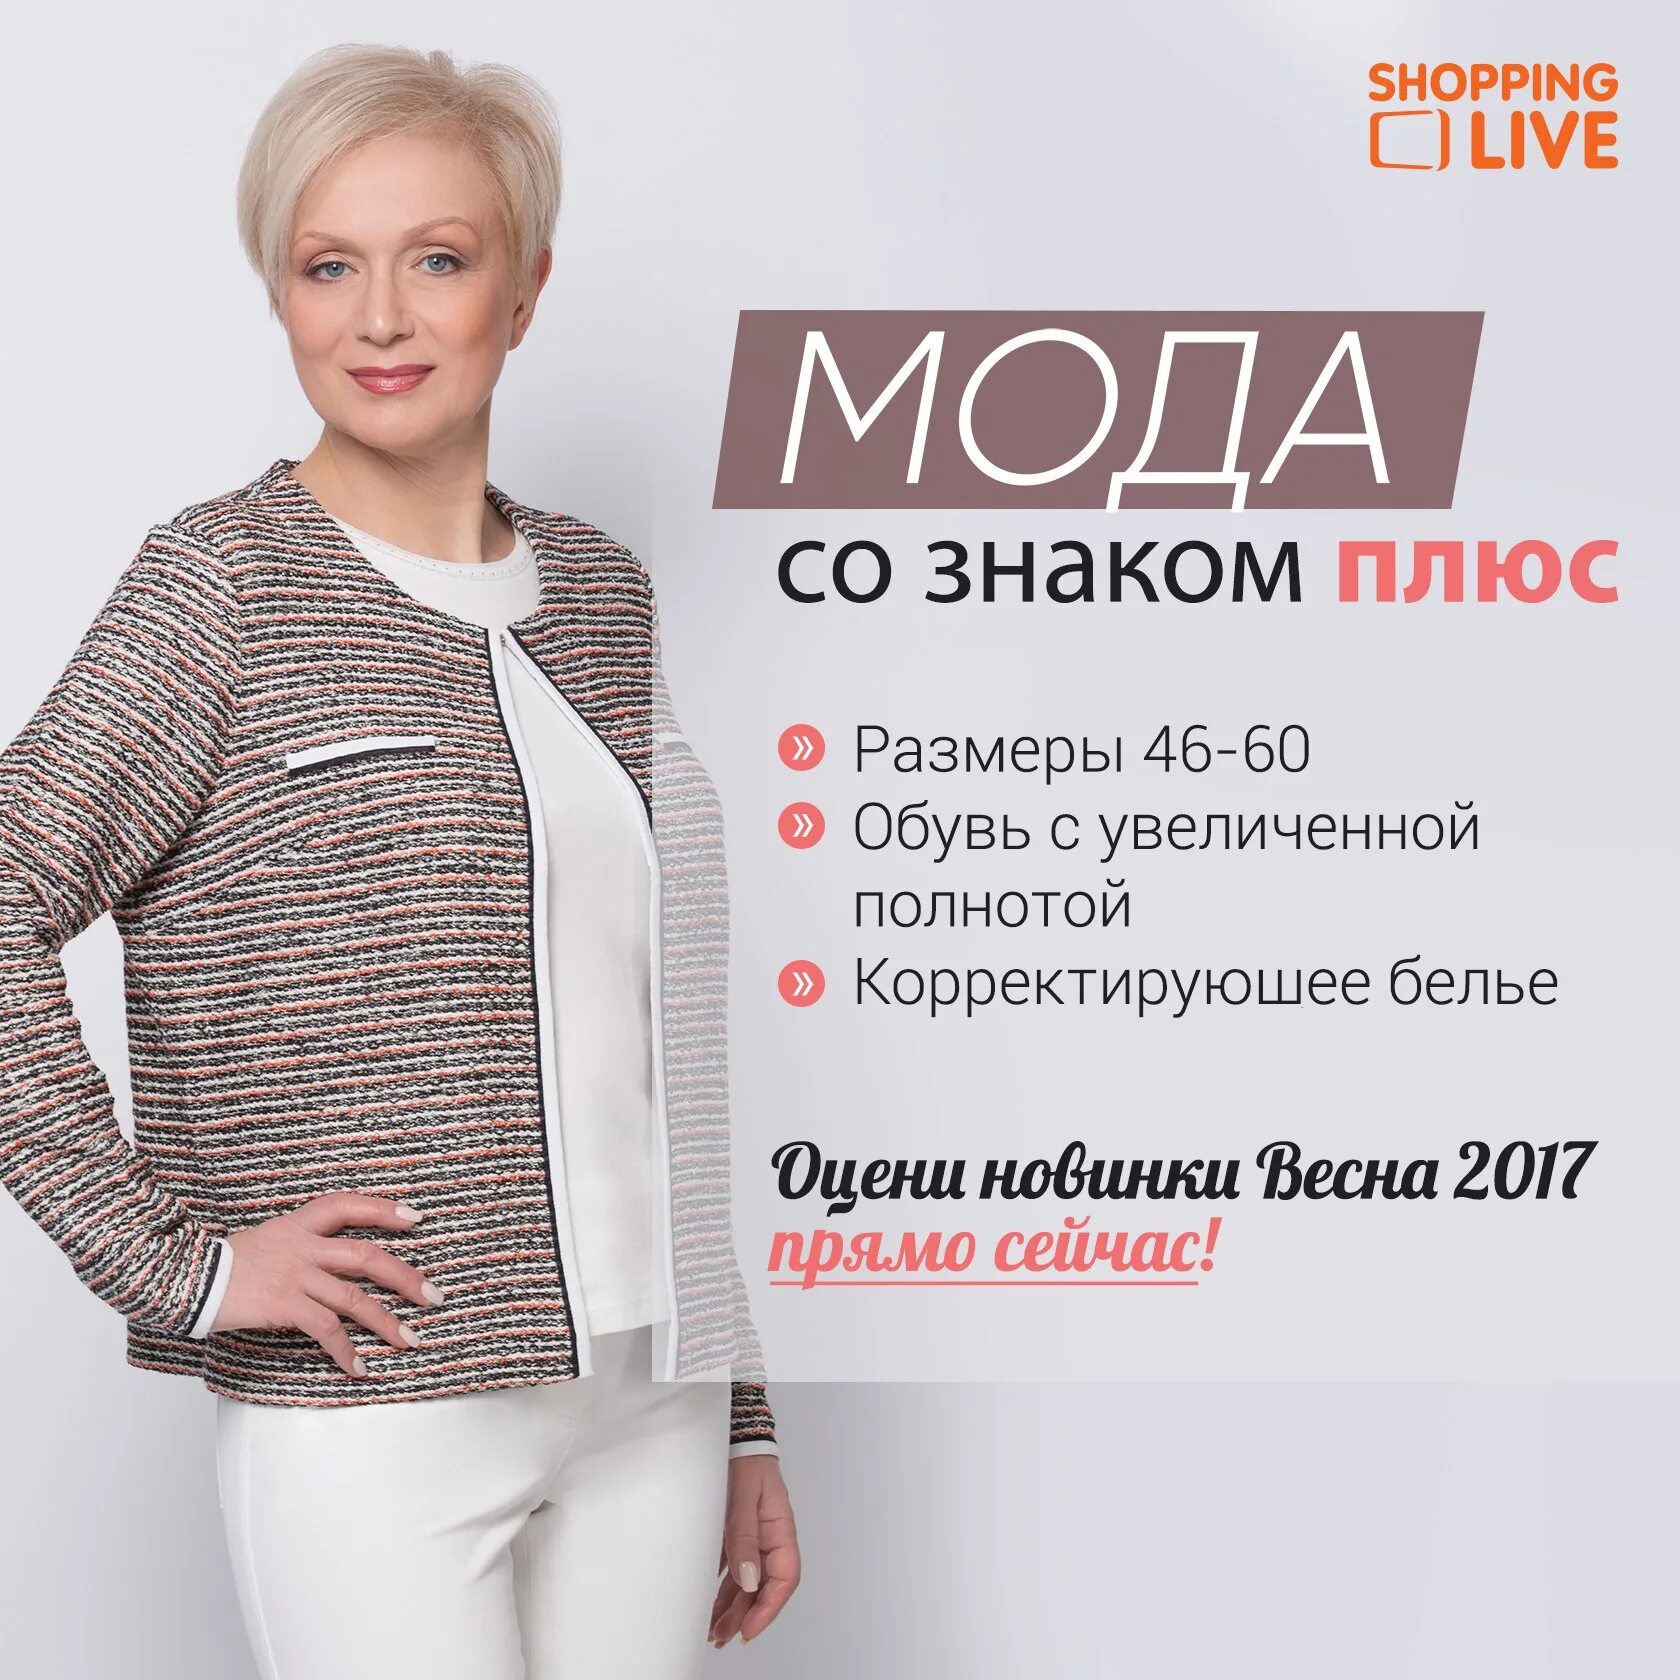 Shops live ru. Shopping Live интернет-магазин. Shopping Live интернет магазин каталог. SHOPPINGLIVE.ru интернет магазин. Каталог одежды.